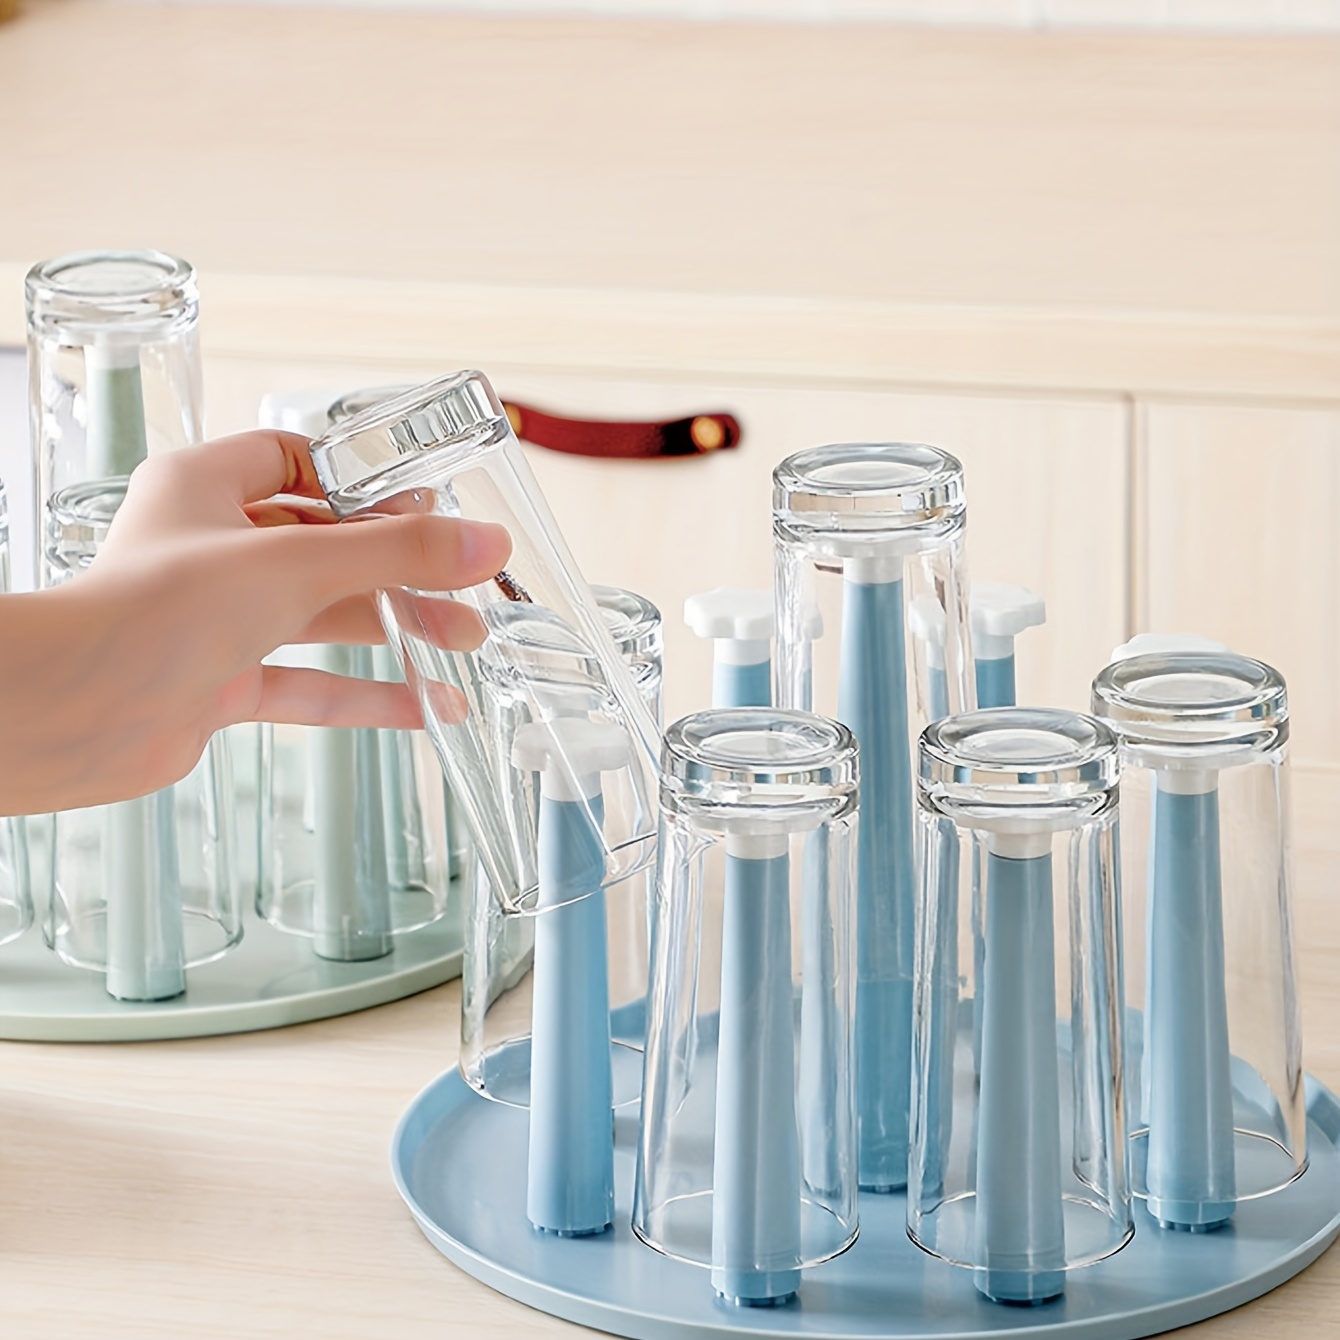 Bottle Drying Rack Stand, Plastic Flower Type Utensils Drainer Cup Dryer  Tray Holder, Mug Organizer, Kitchen Accessories